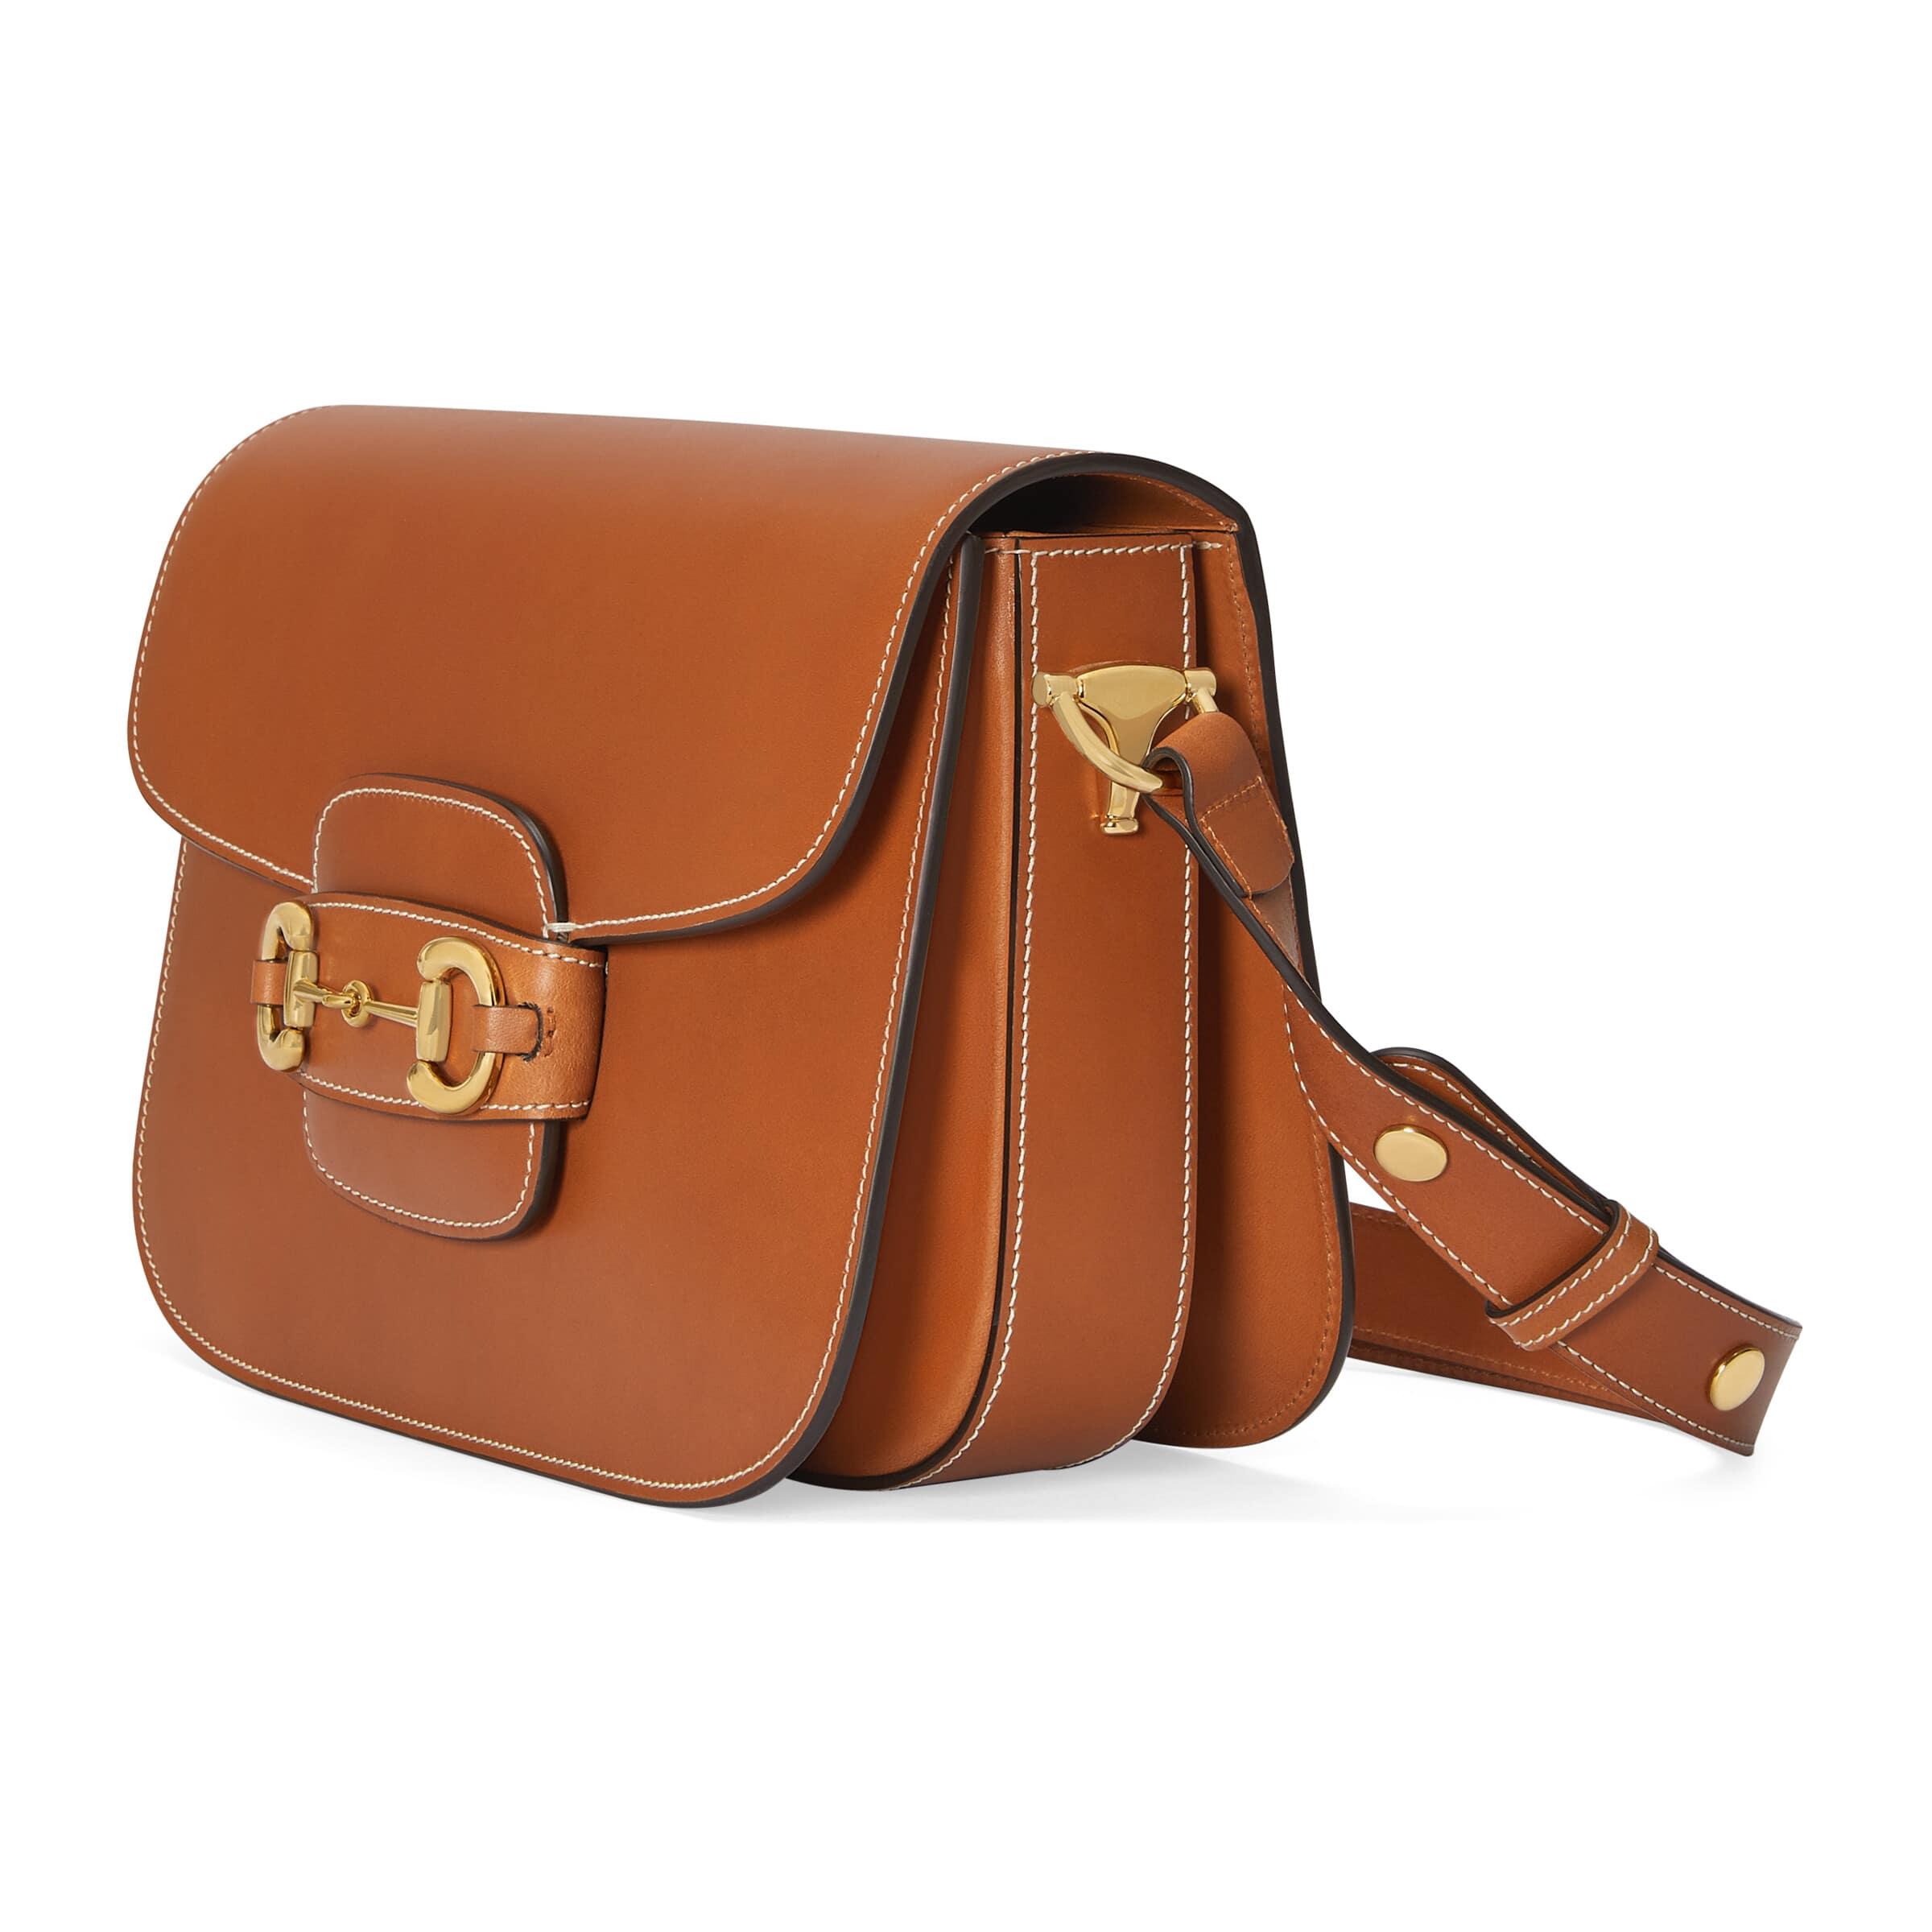 Gucci Horsebit 1955 Shoulder Bag in Brown